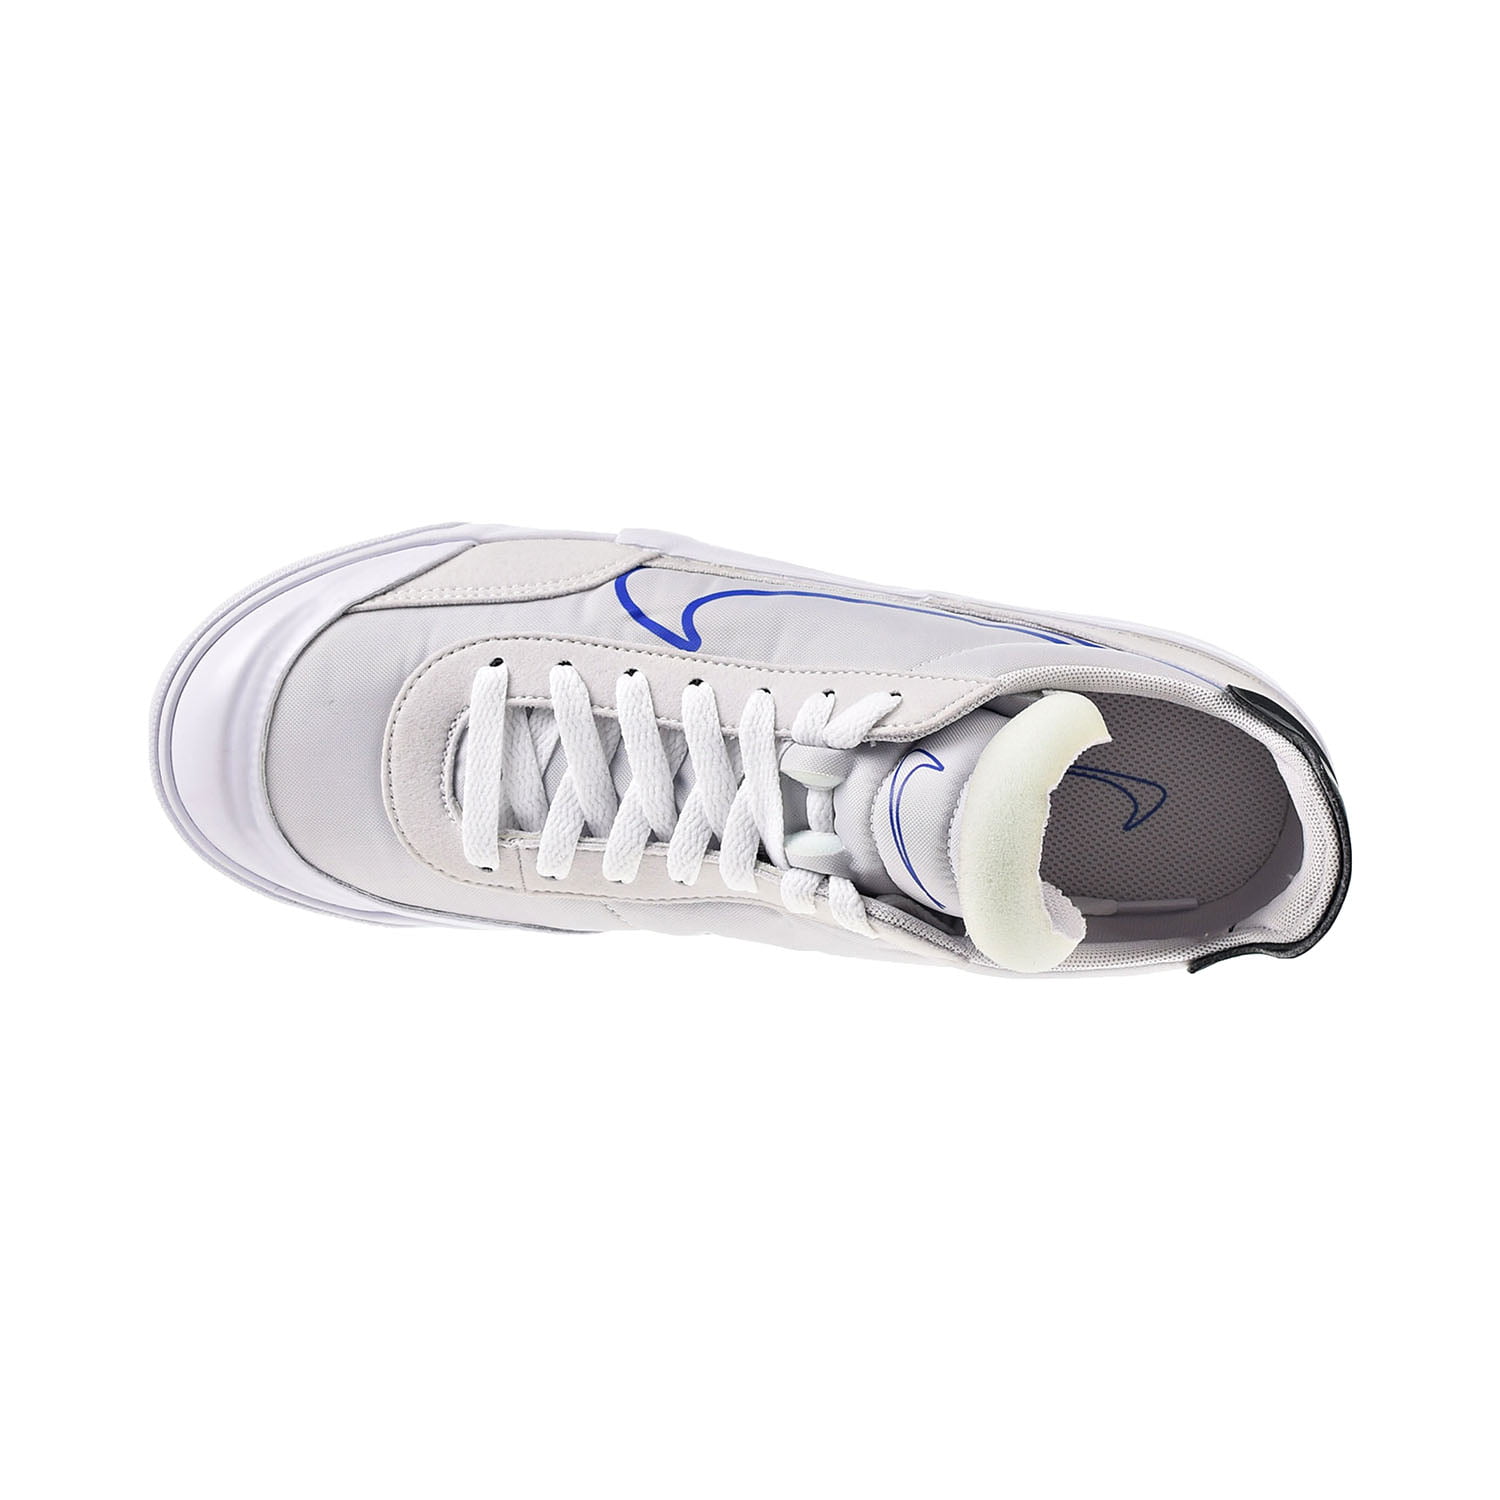 Nike Drop-Type HBR Men's Shoes Vast Grey-Hyper Blue-Black cq0989 